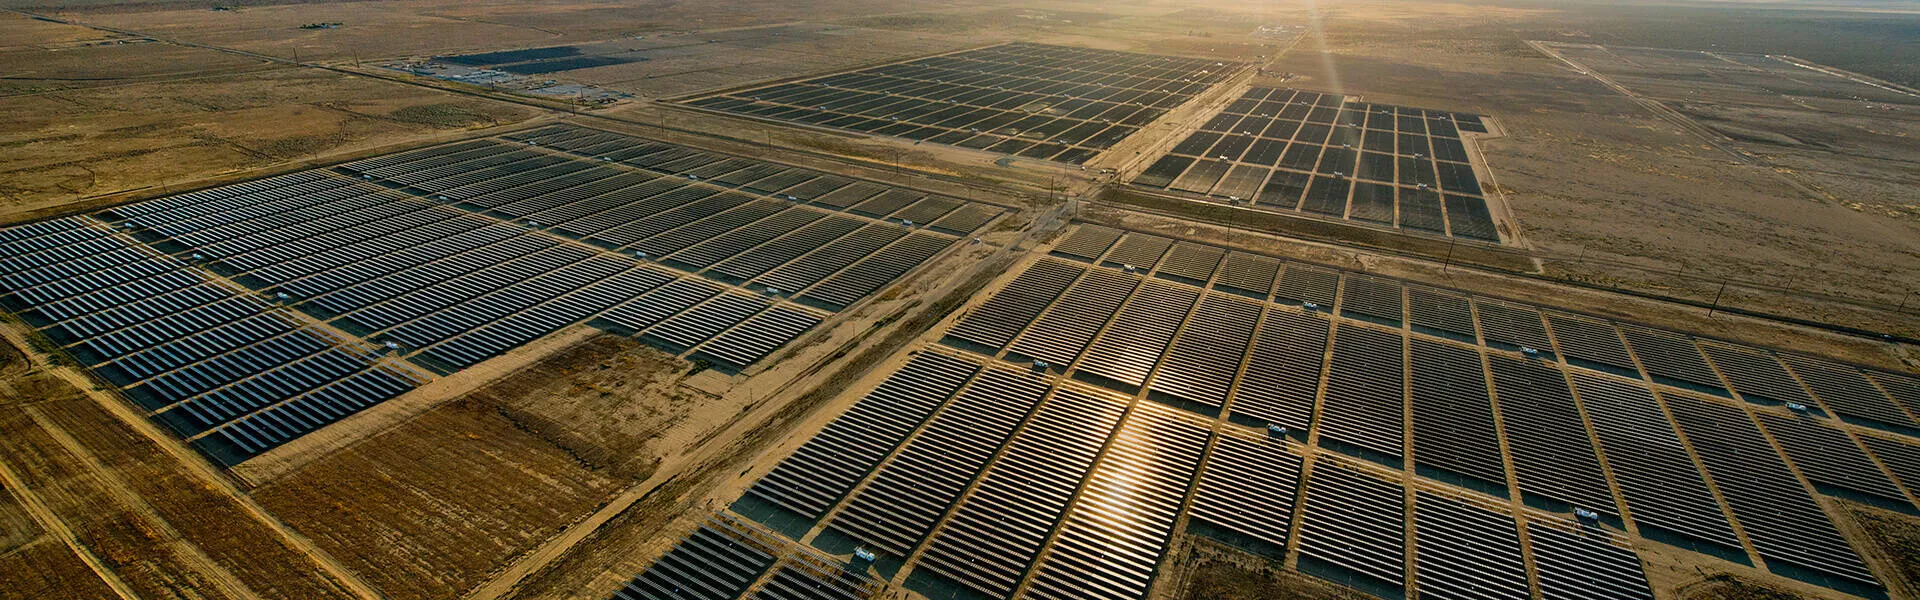 large scale solar power plant